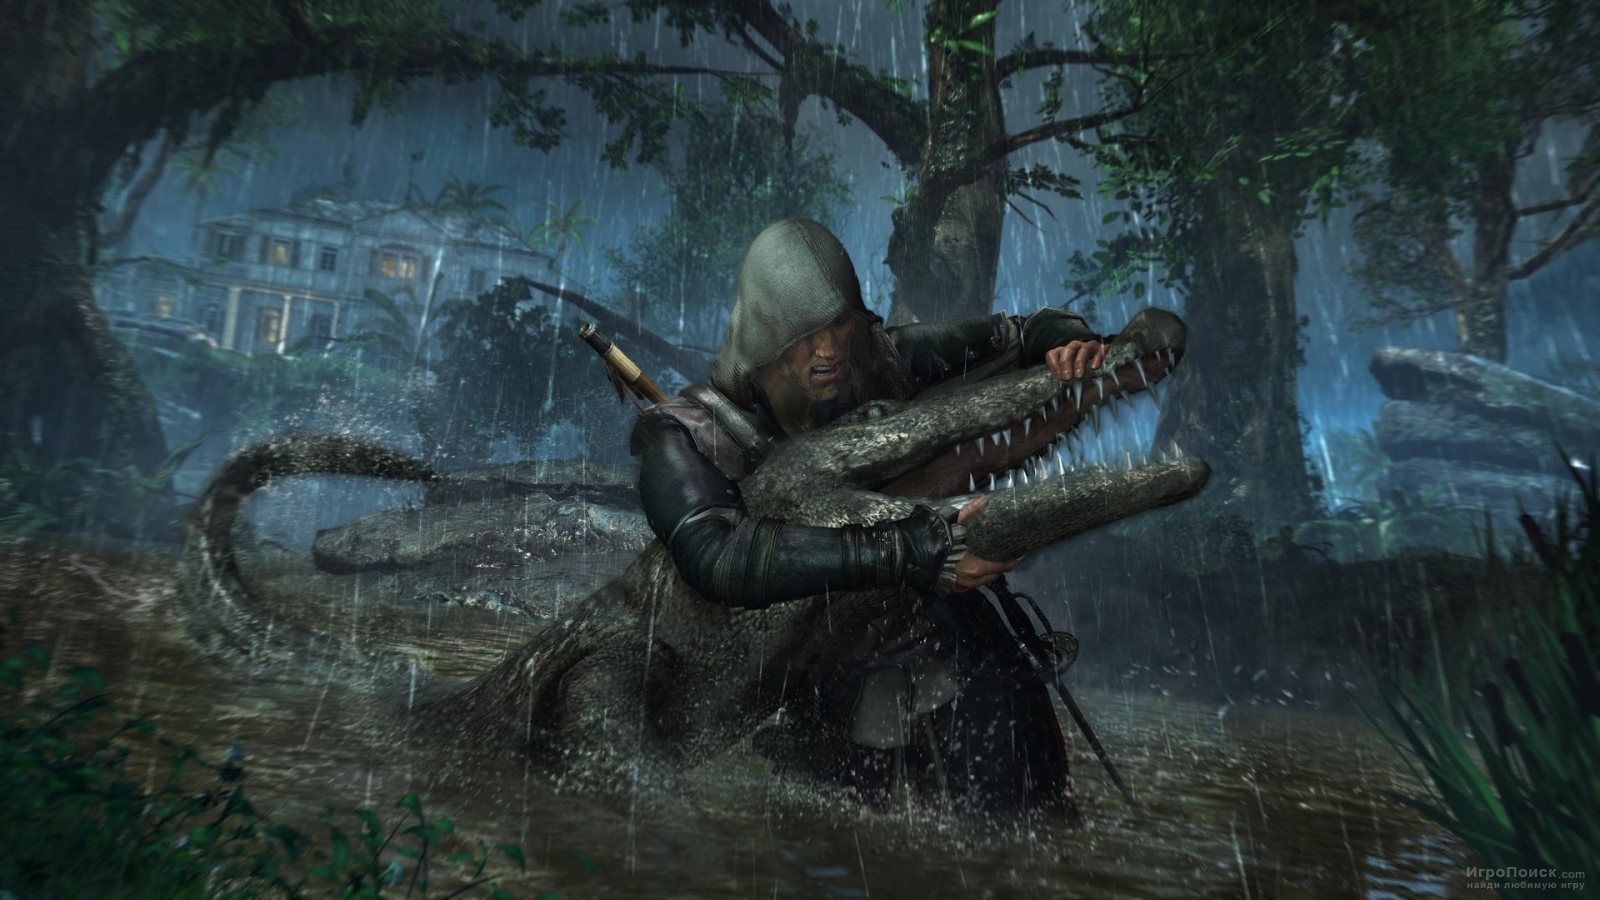 Скриншот к игре Assassin's Creed IV: Black Flag